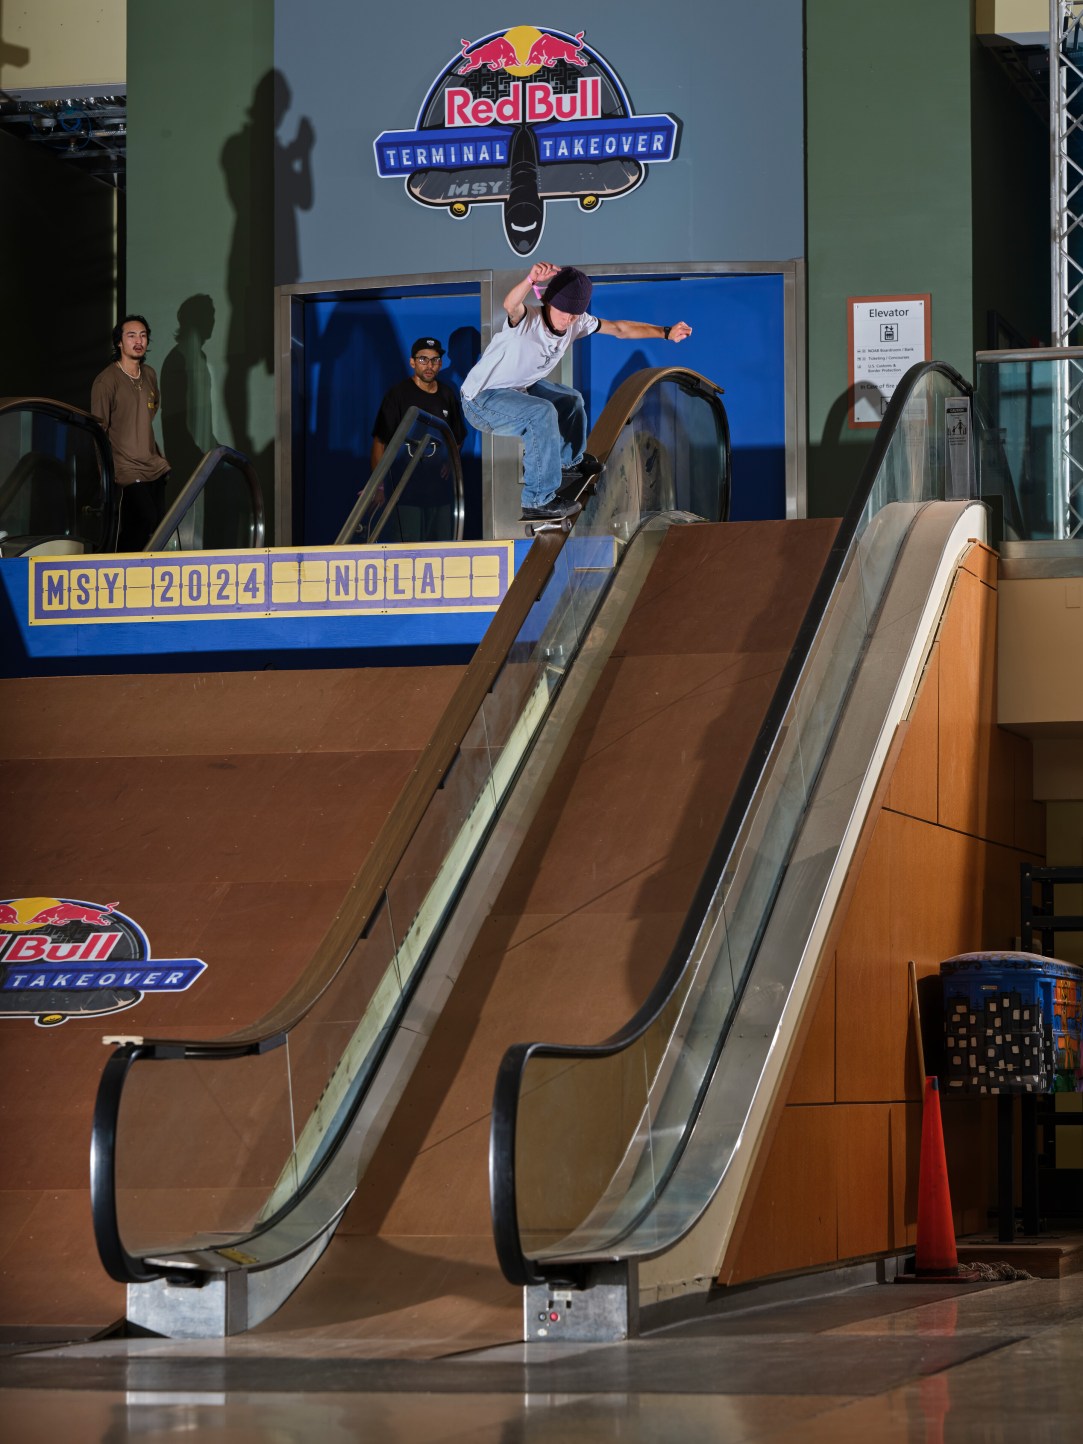 Red Bull Terminal Takeover Skateboard